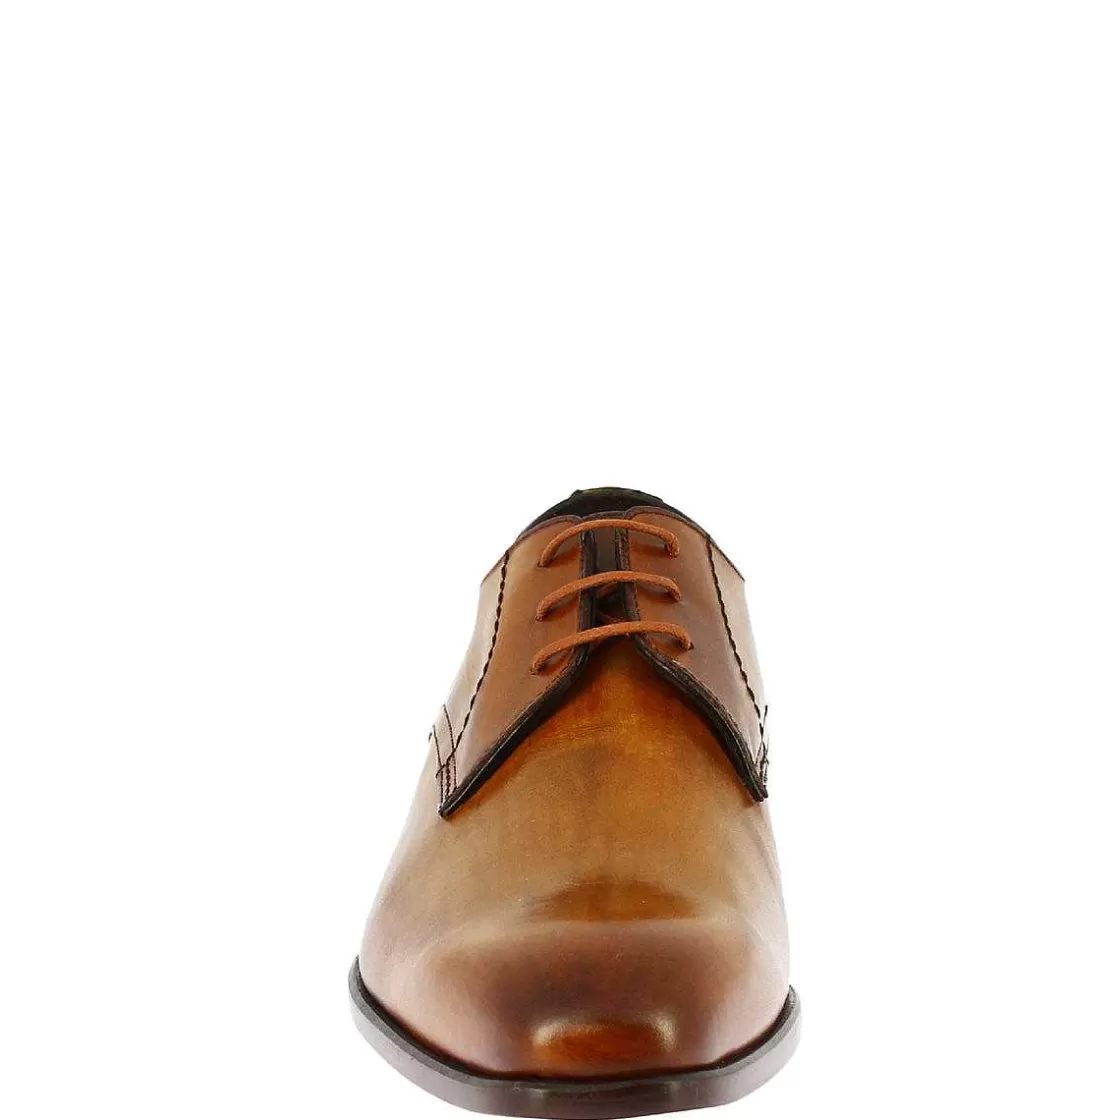 Leonardo Men'S Handmade Elegant Formal Shoes In Brown Calf Leather Discount